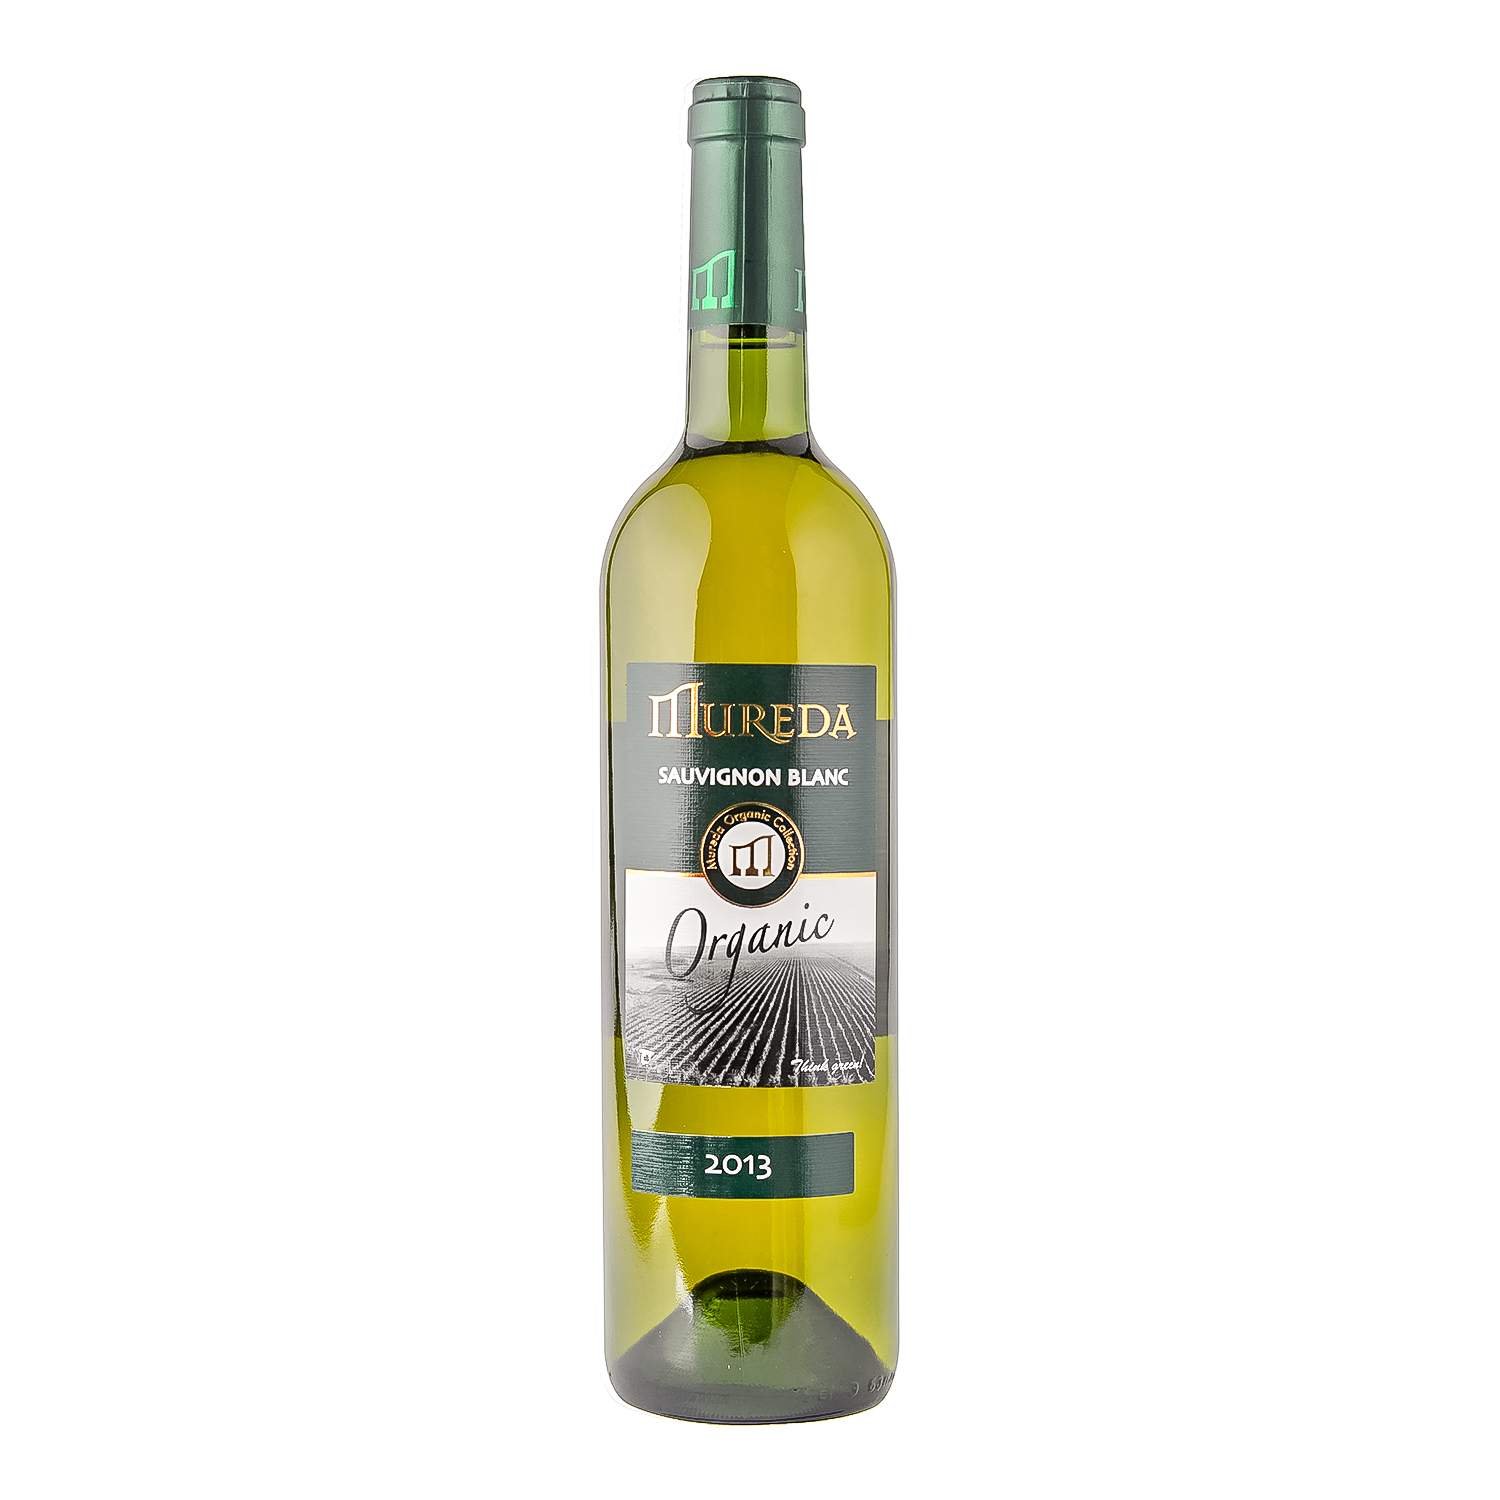 Mureda organicsuvignon blanc vino 0,75l